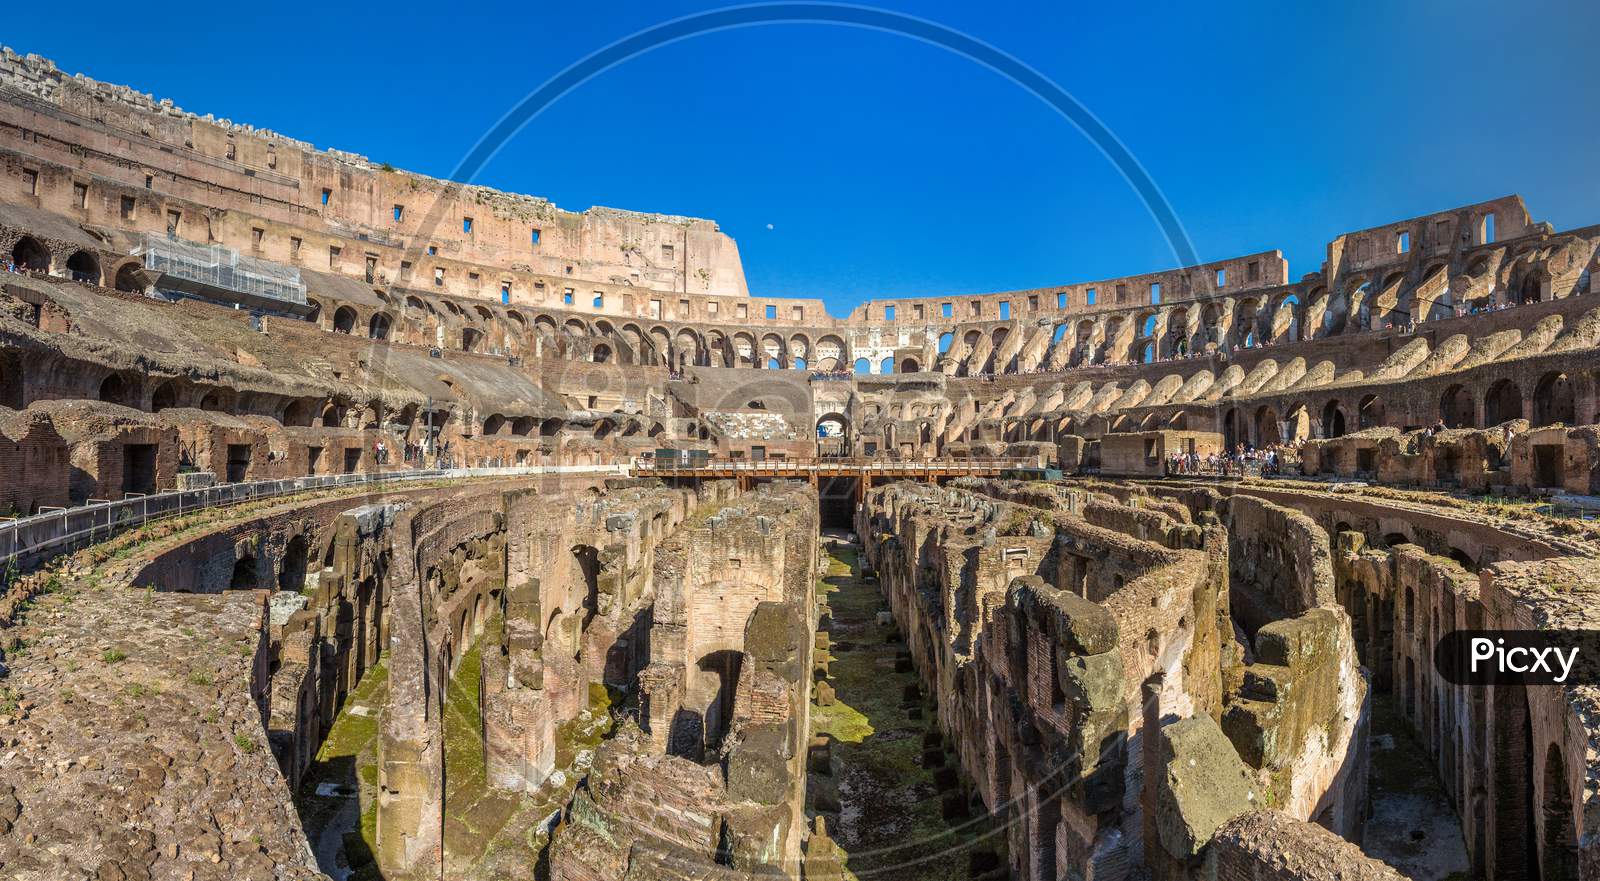 Arena Of Flavian Amphitheatre (Colosseum) In Rome, Italy